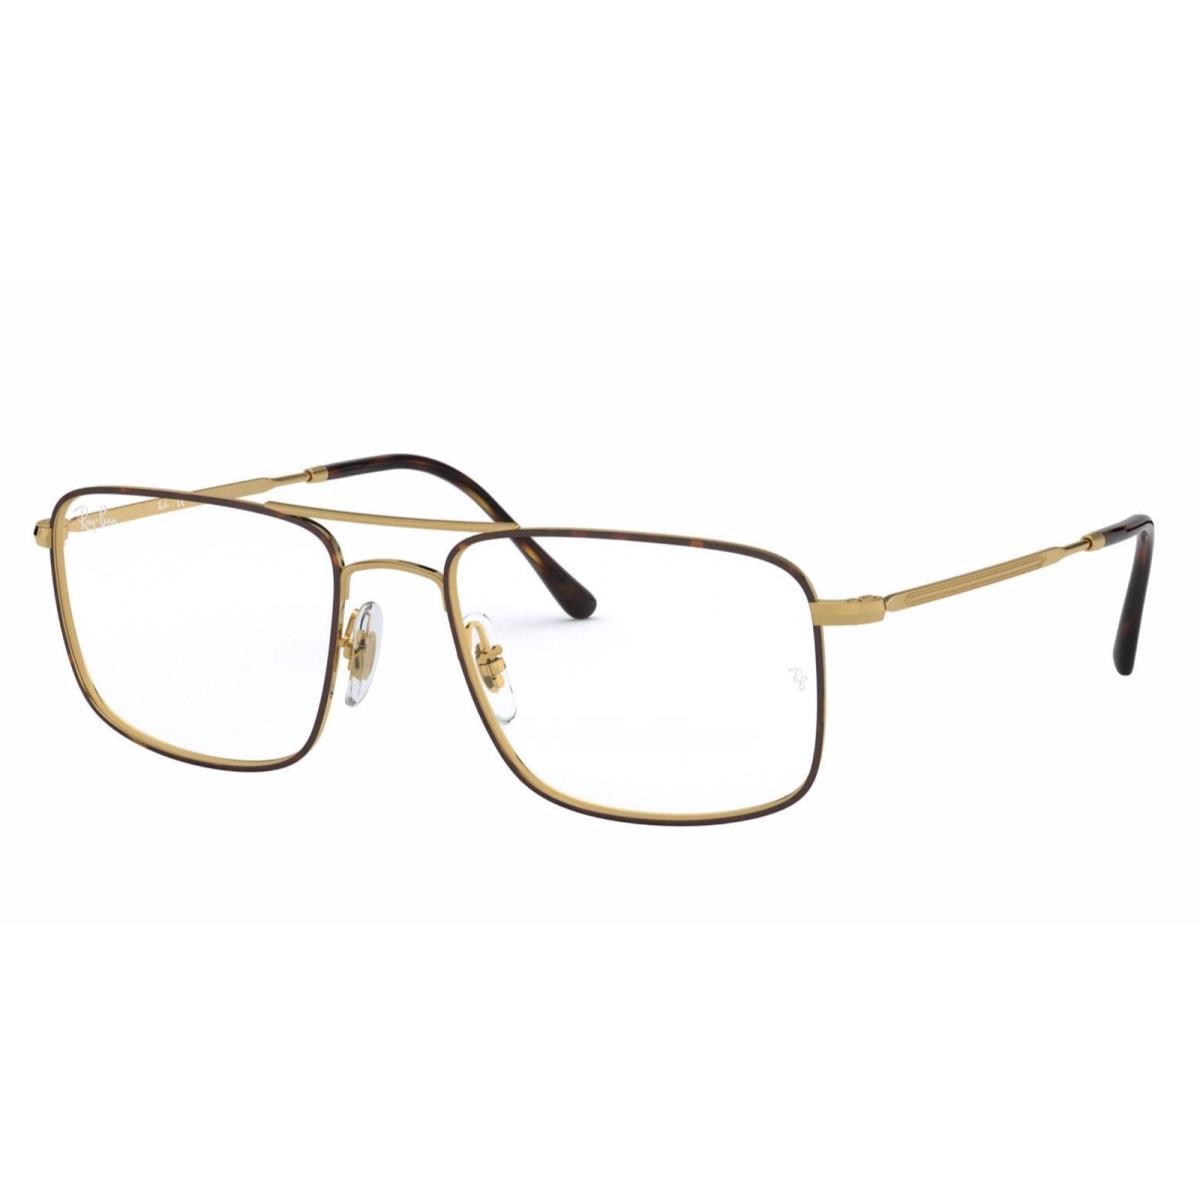 Ray-ban Rx-able Eyeglasses RB 6434 2945 53-18 140 Gold Tortoise Frames